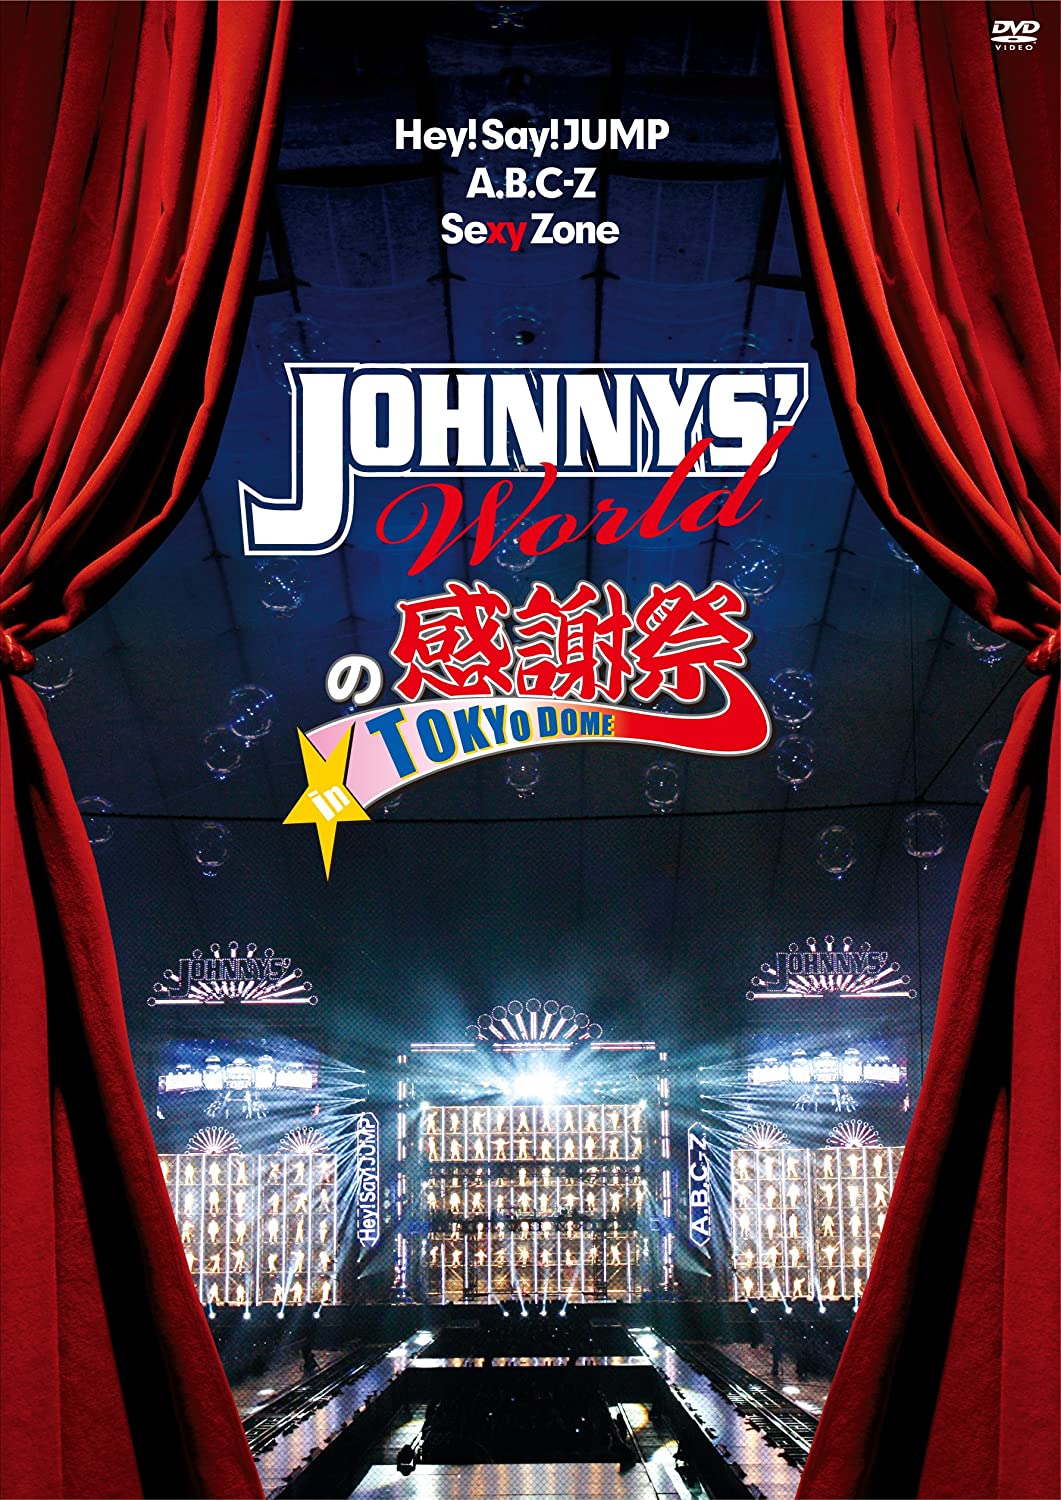 JOHNNYS' World no Kanshasai in TOKYO DOME | Jpop Wiki | Fandom